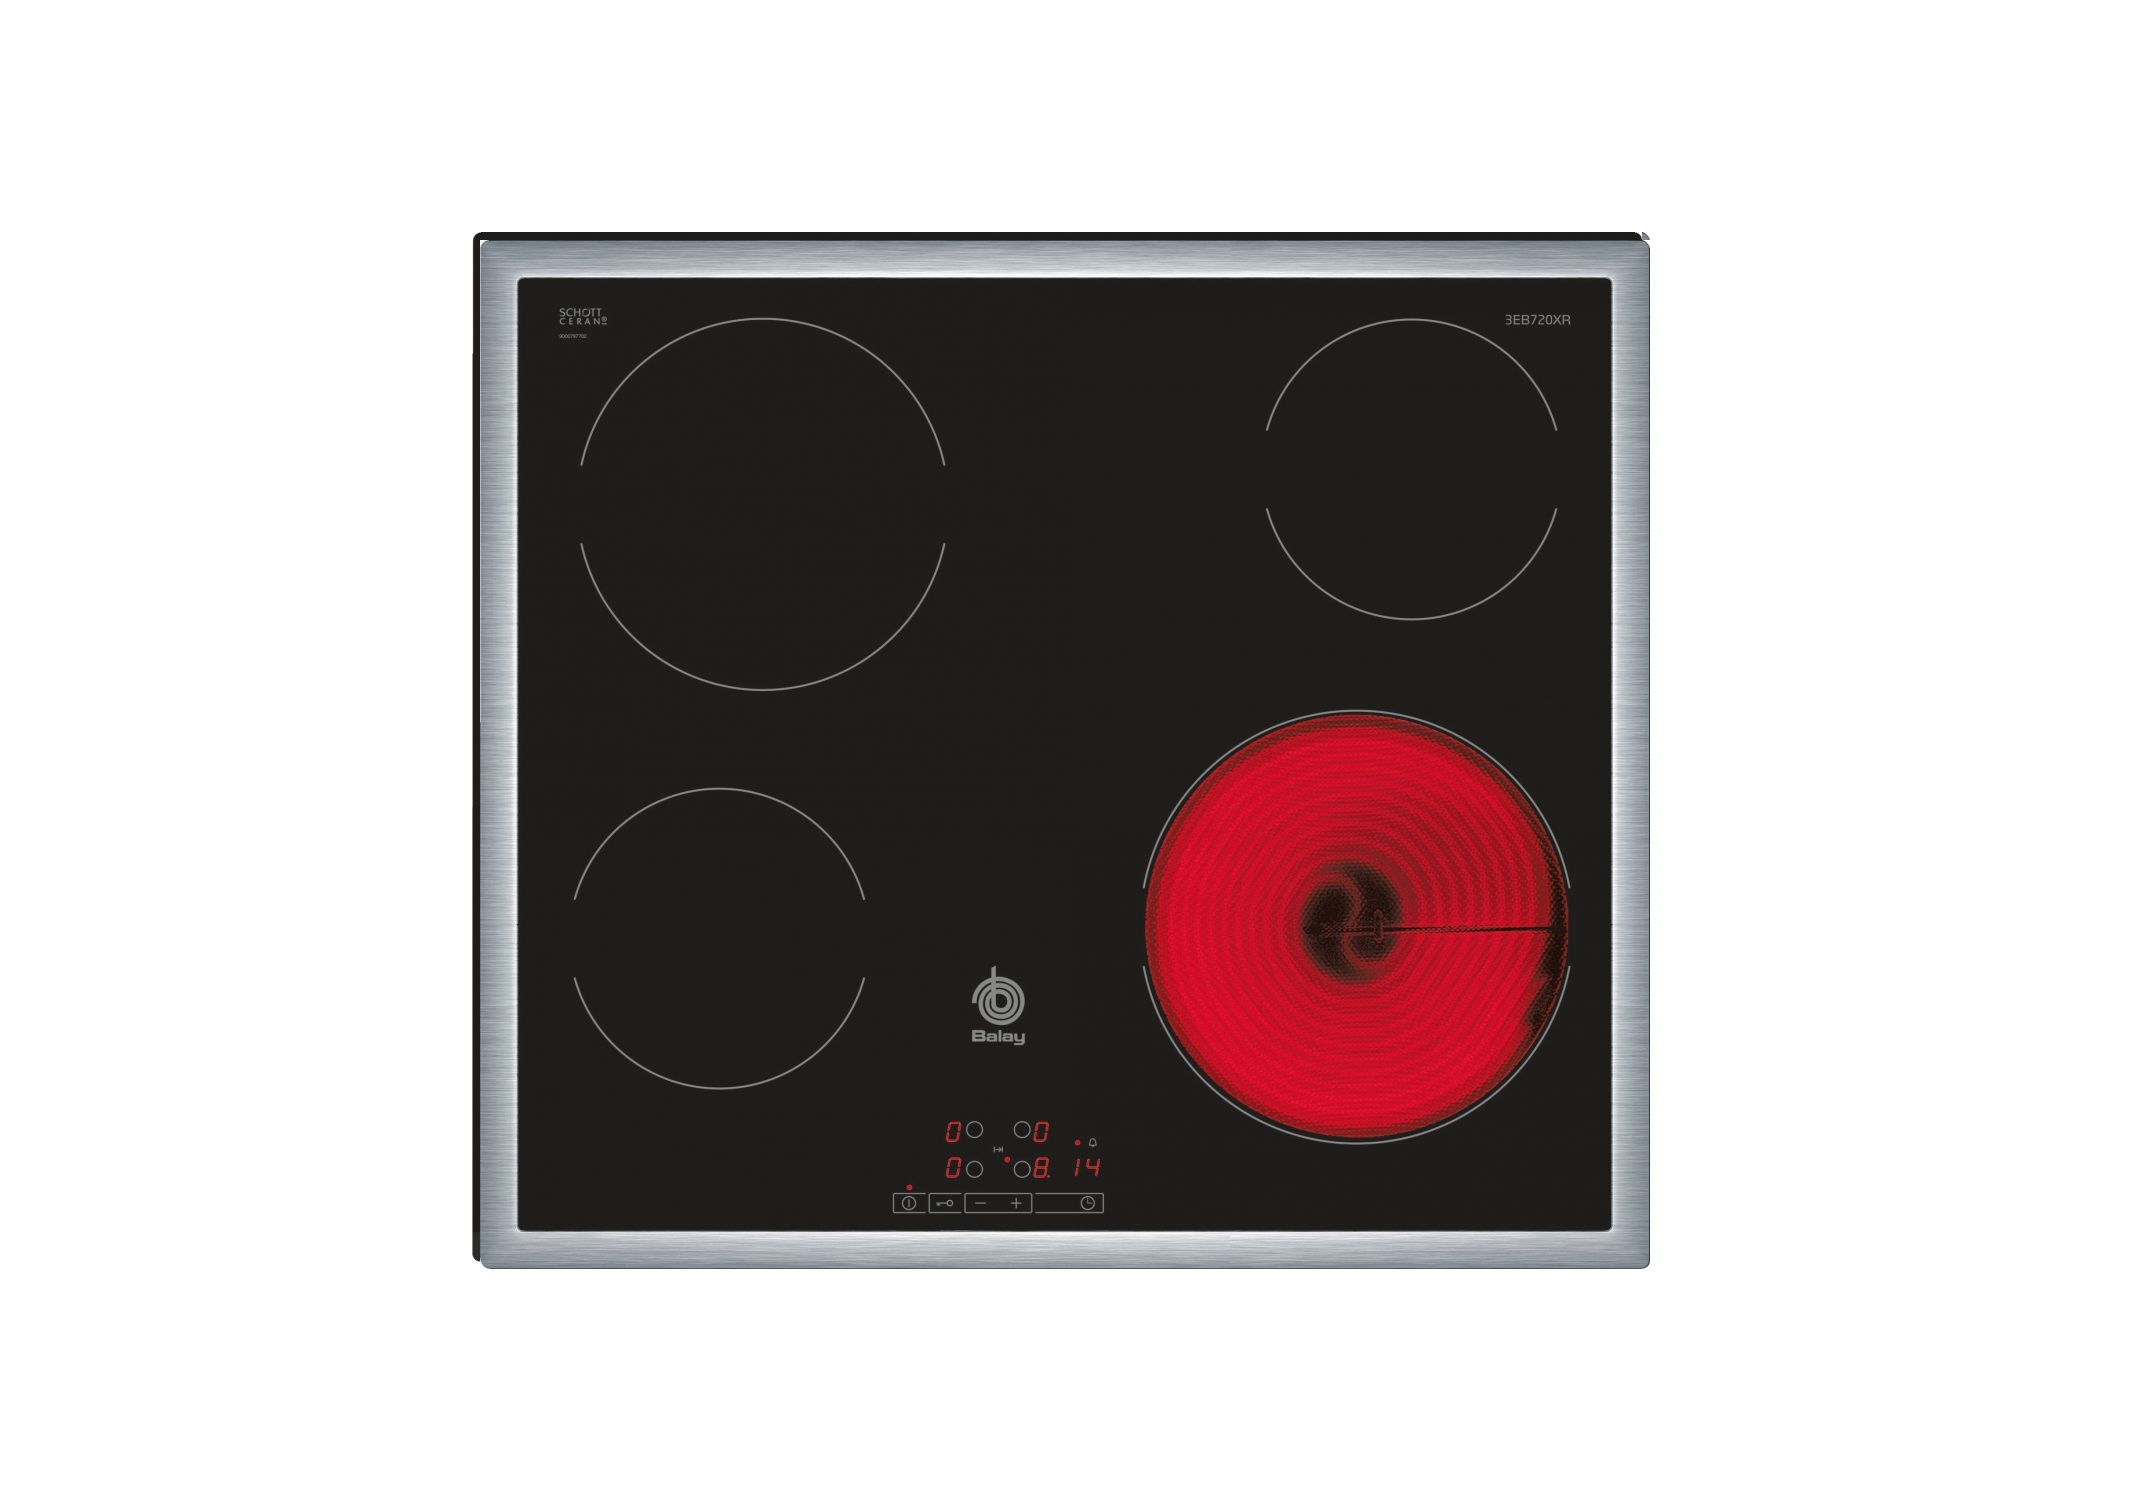 Placa inducción  Balay 3EB985LU, 4 zonas, 28 cm, Negro